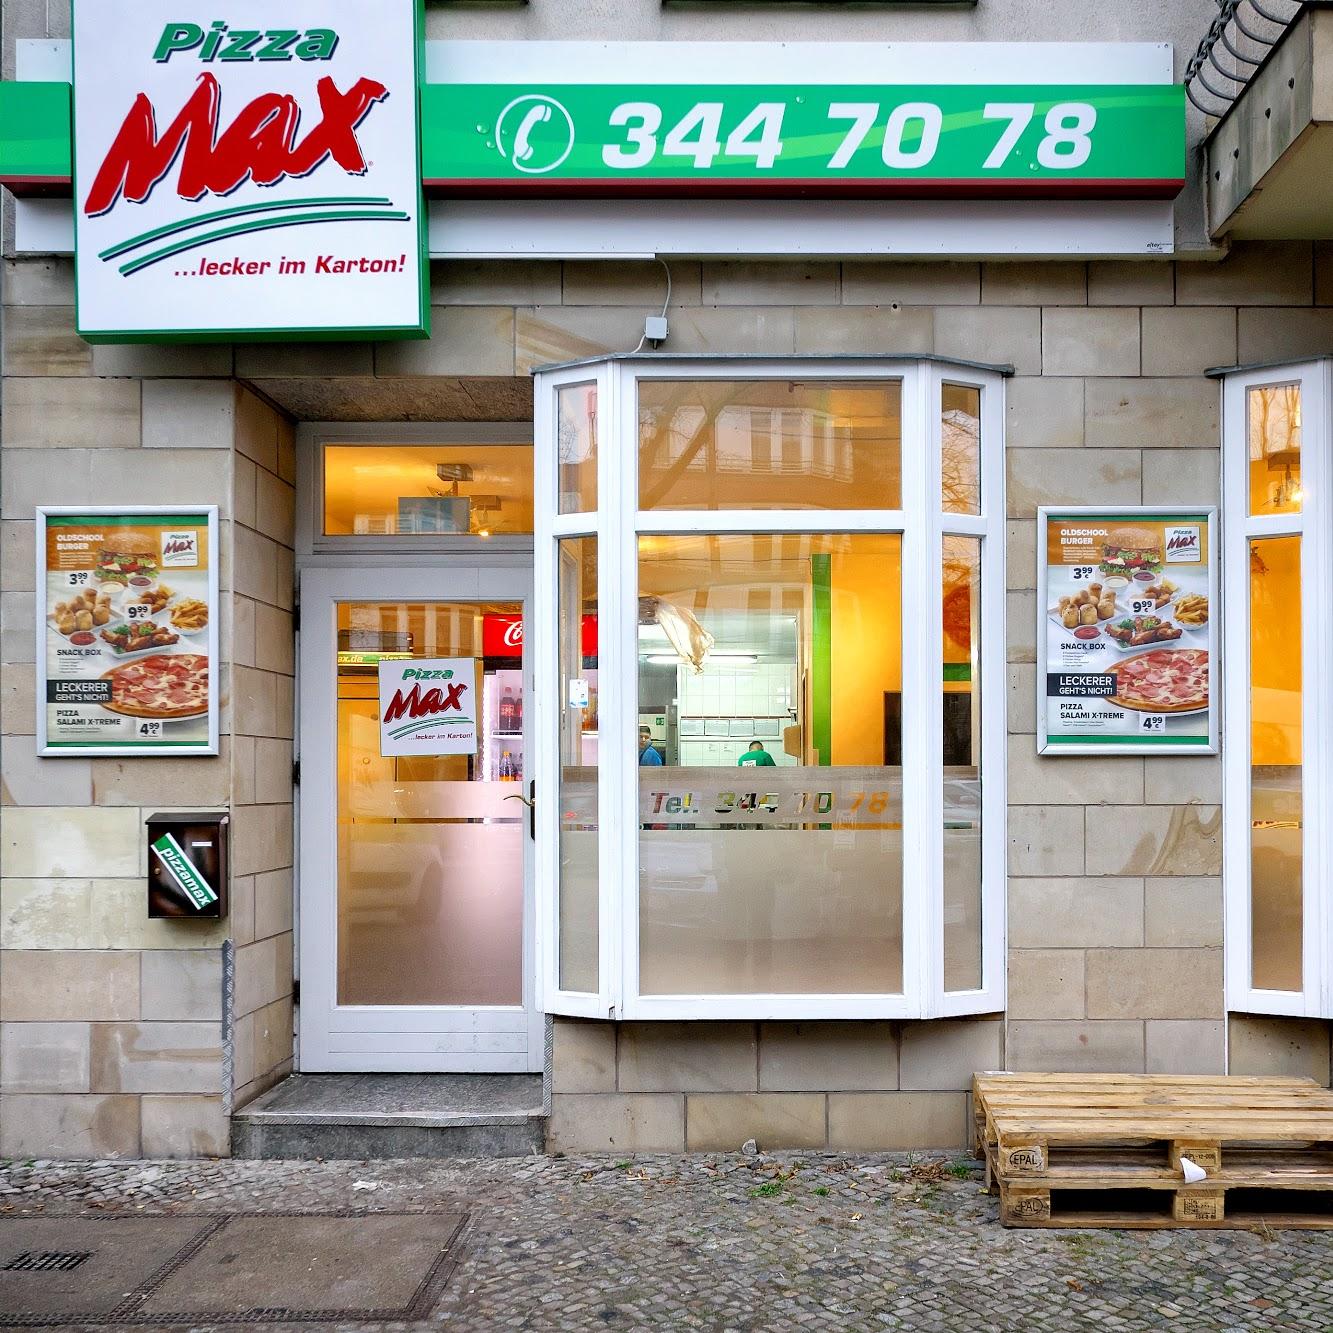 Restaurant "Pizza Max Berlin Charlottenburg" in Berlin